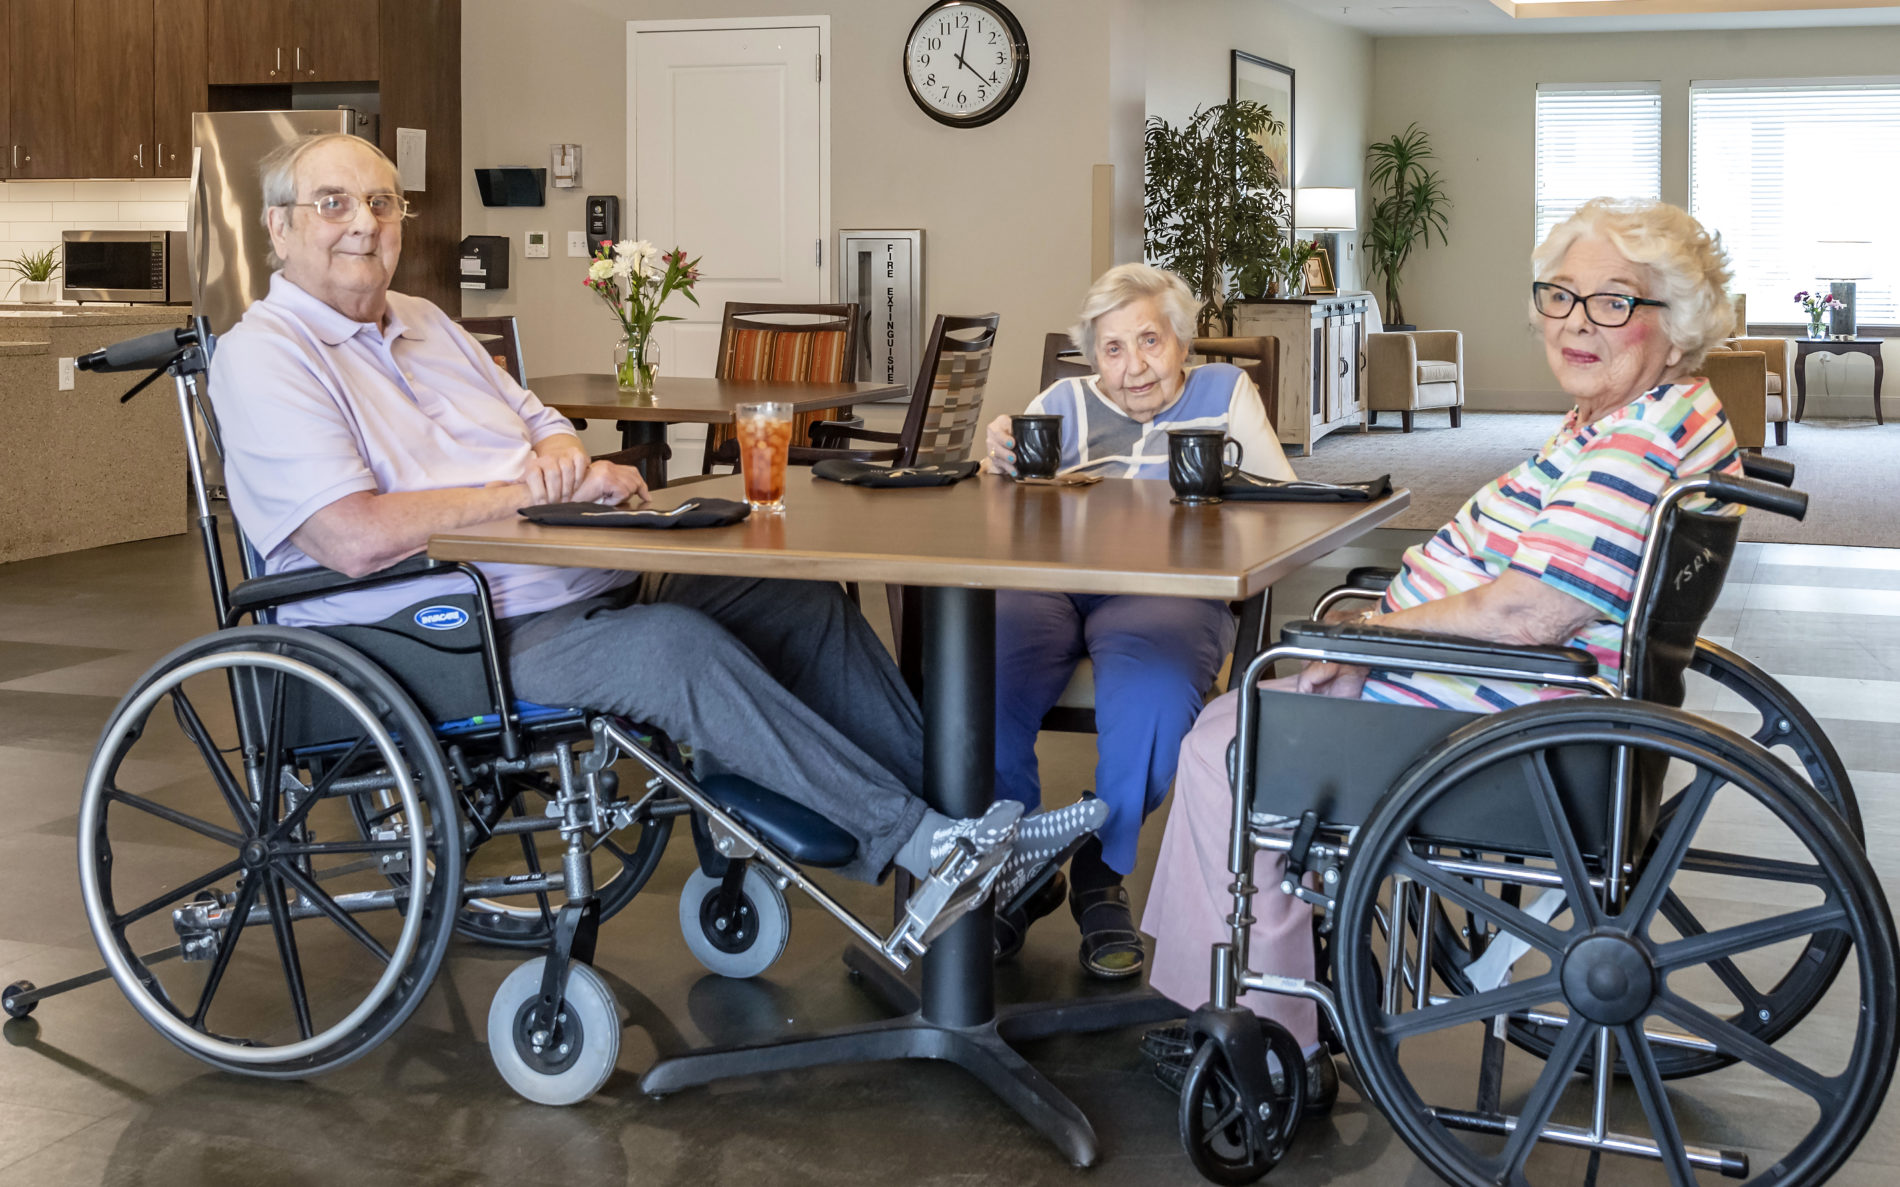 Elderly women and man in wheelchairs around table